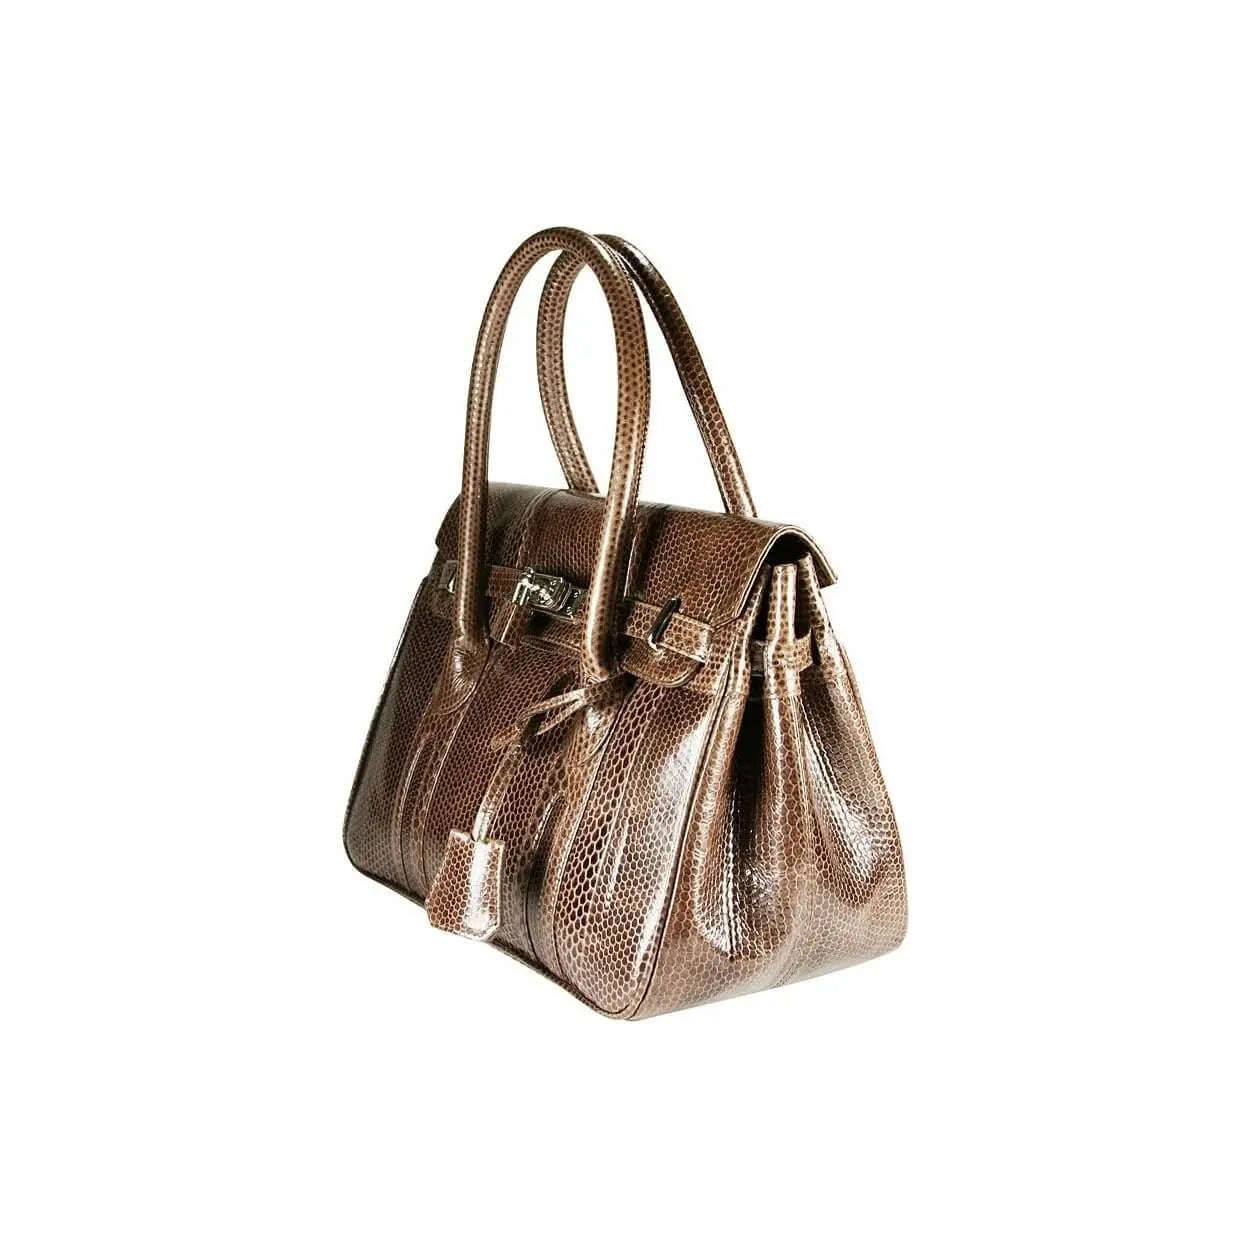 Snake Leather brown color Ladies Handbag by DeLeo One